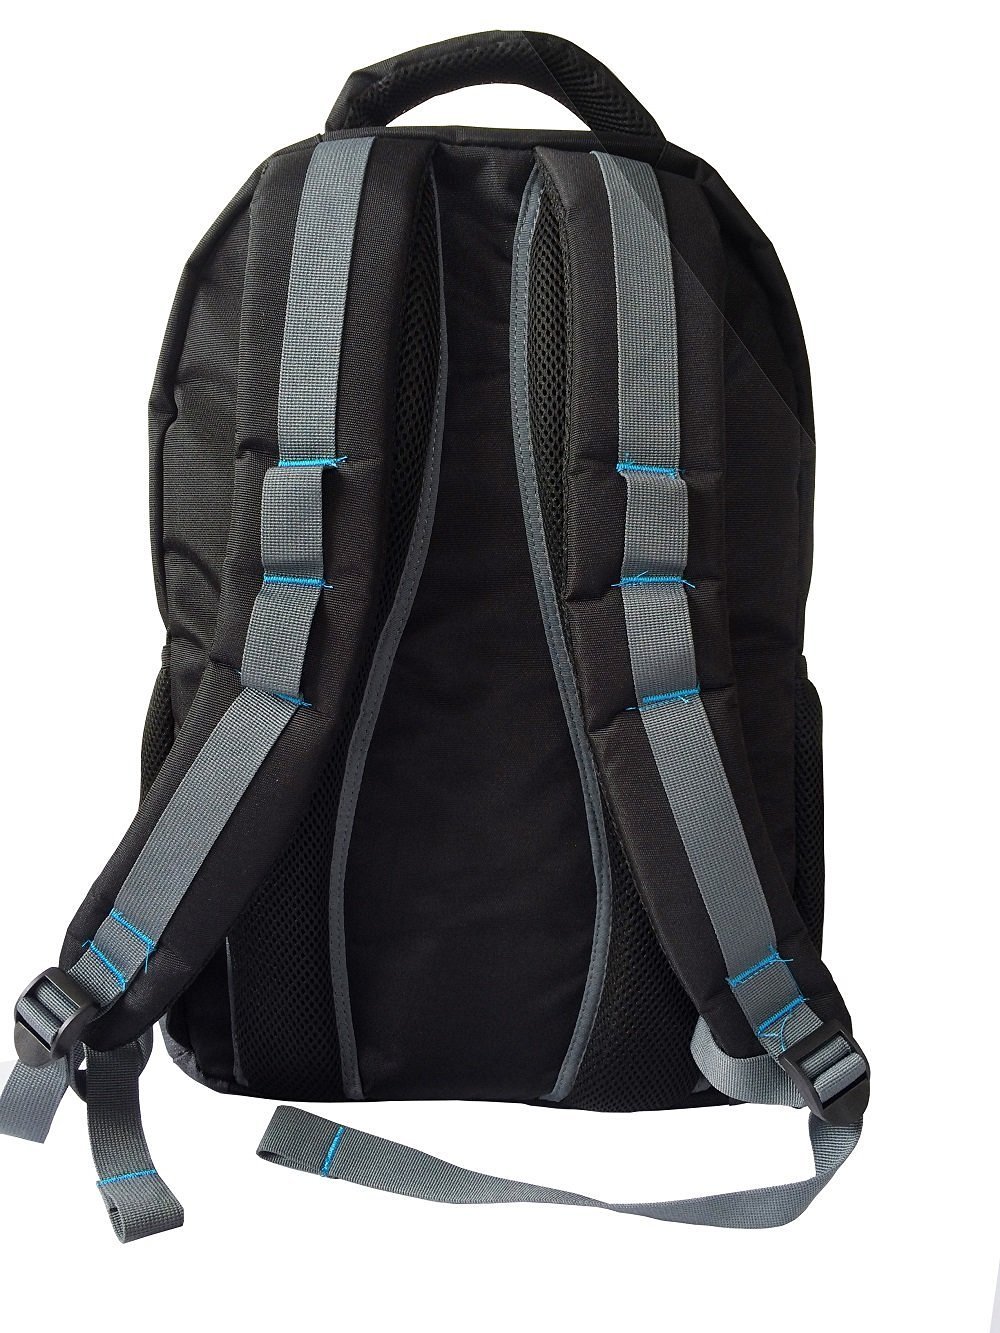 HP Premium HP-W2N96PA 15.6-inch Laptop Backpack (Blue/Grey)